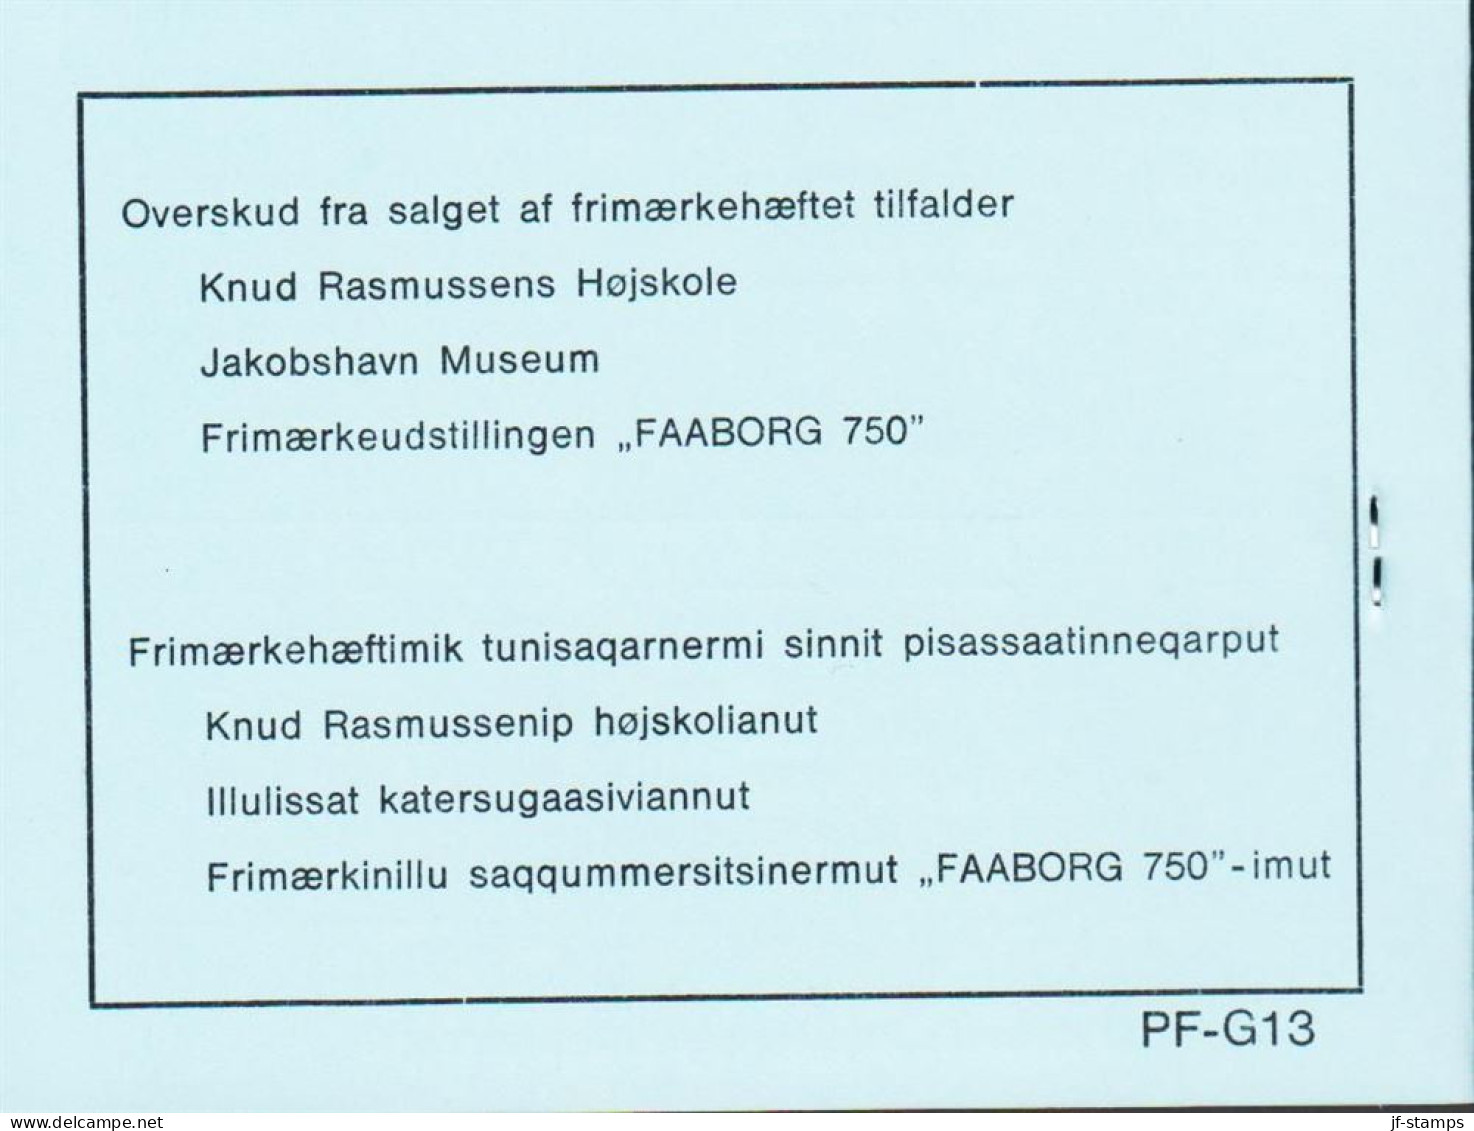 1979. GRØNLAND.  Knud Rasmussen 130+20 Øre Red Upper Margin 4-Block With Number G 039. Privat... (Michel 116) - JF545580 - Unused Stamps